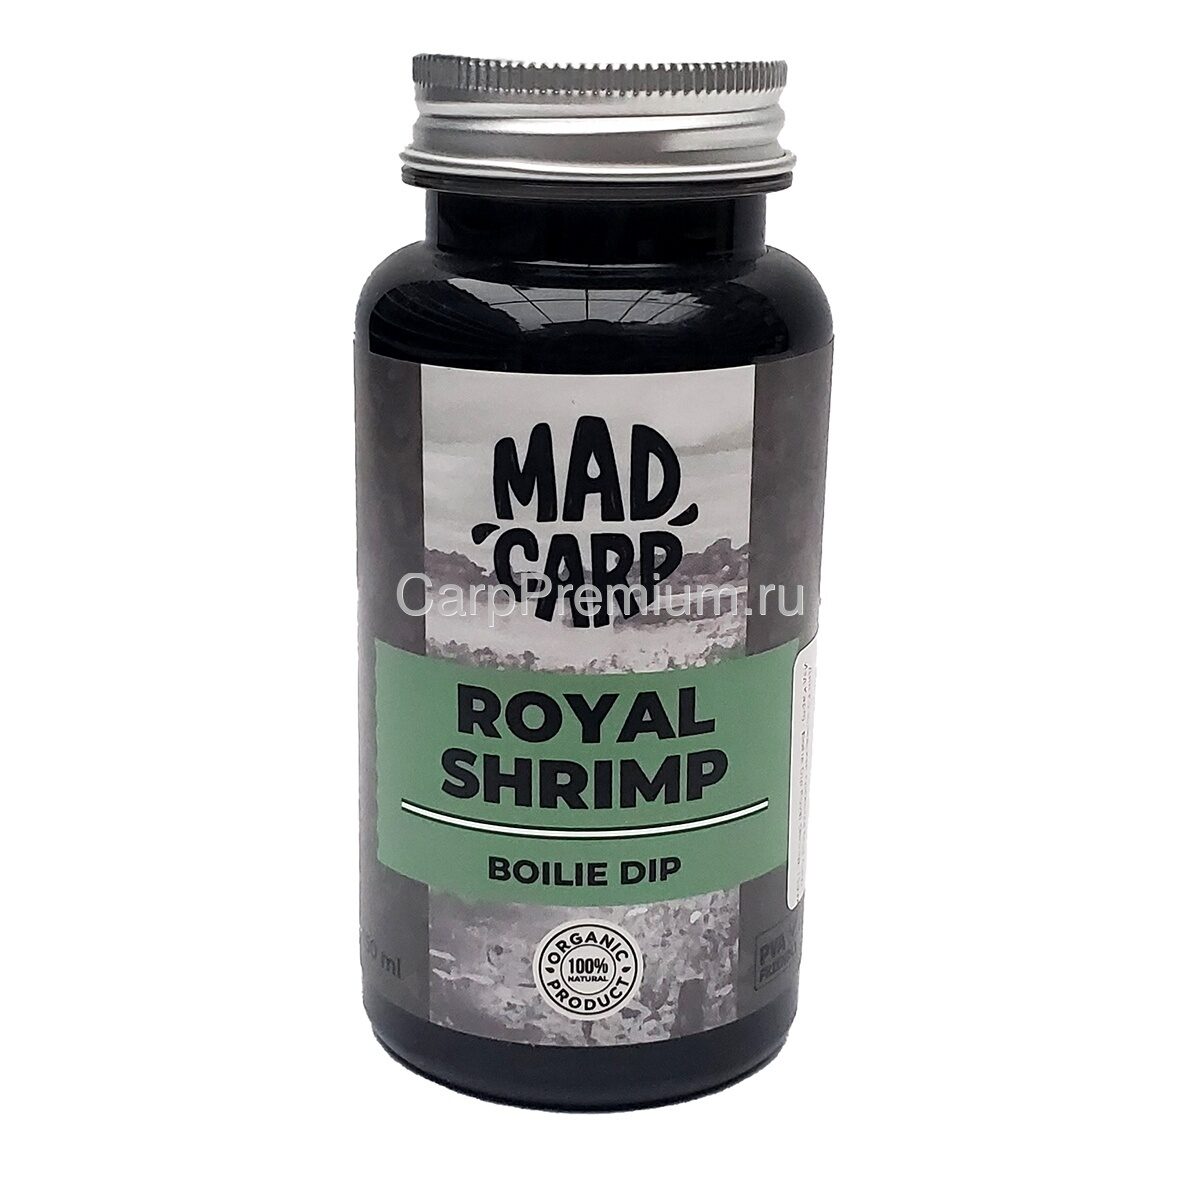 Дип Королевская Креветка Mad Carp (Мэд Карп) - Boilie Dip Royal Shrimp, 150 мл